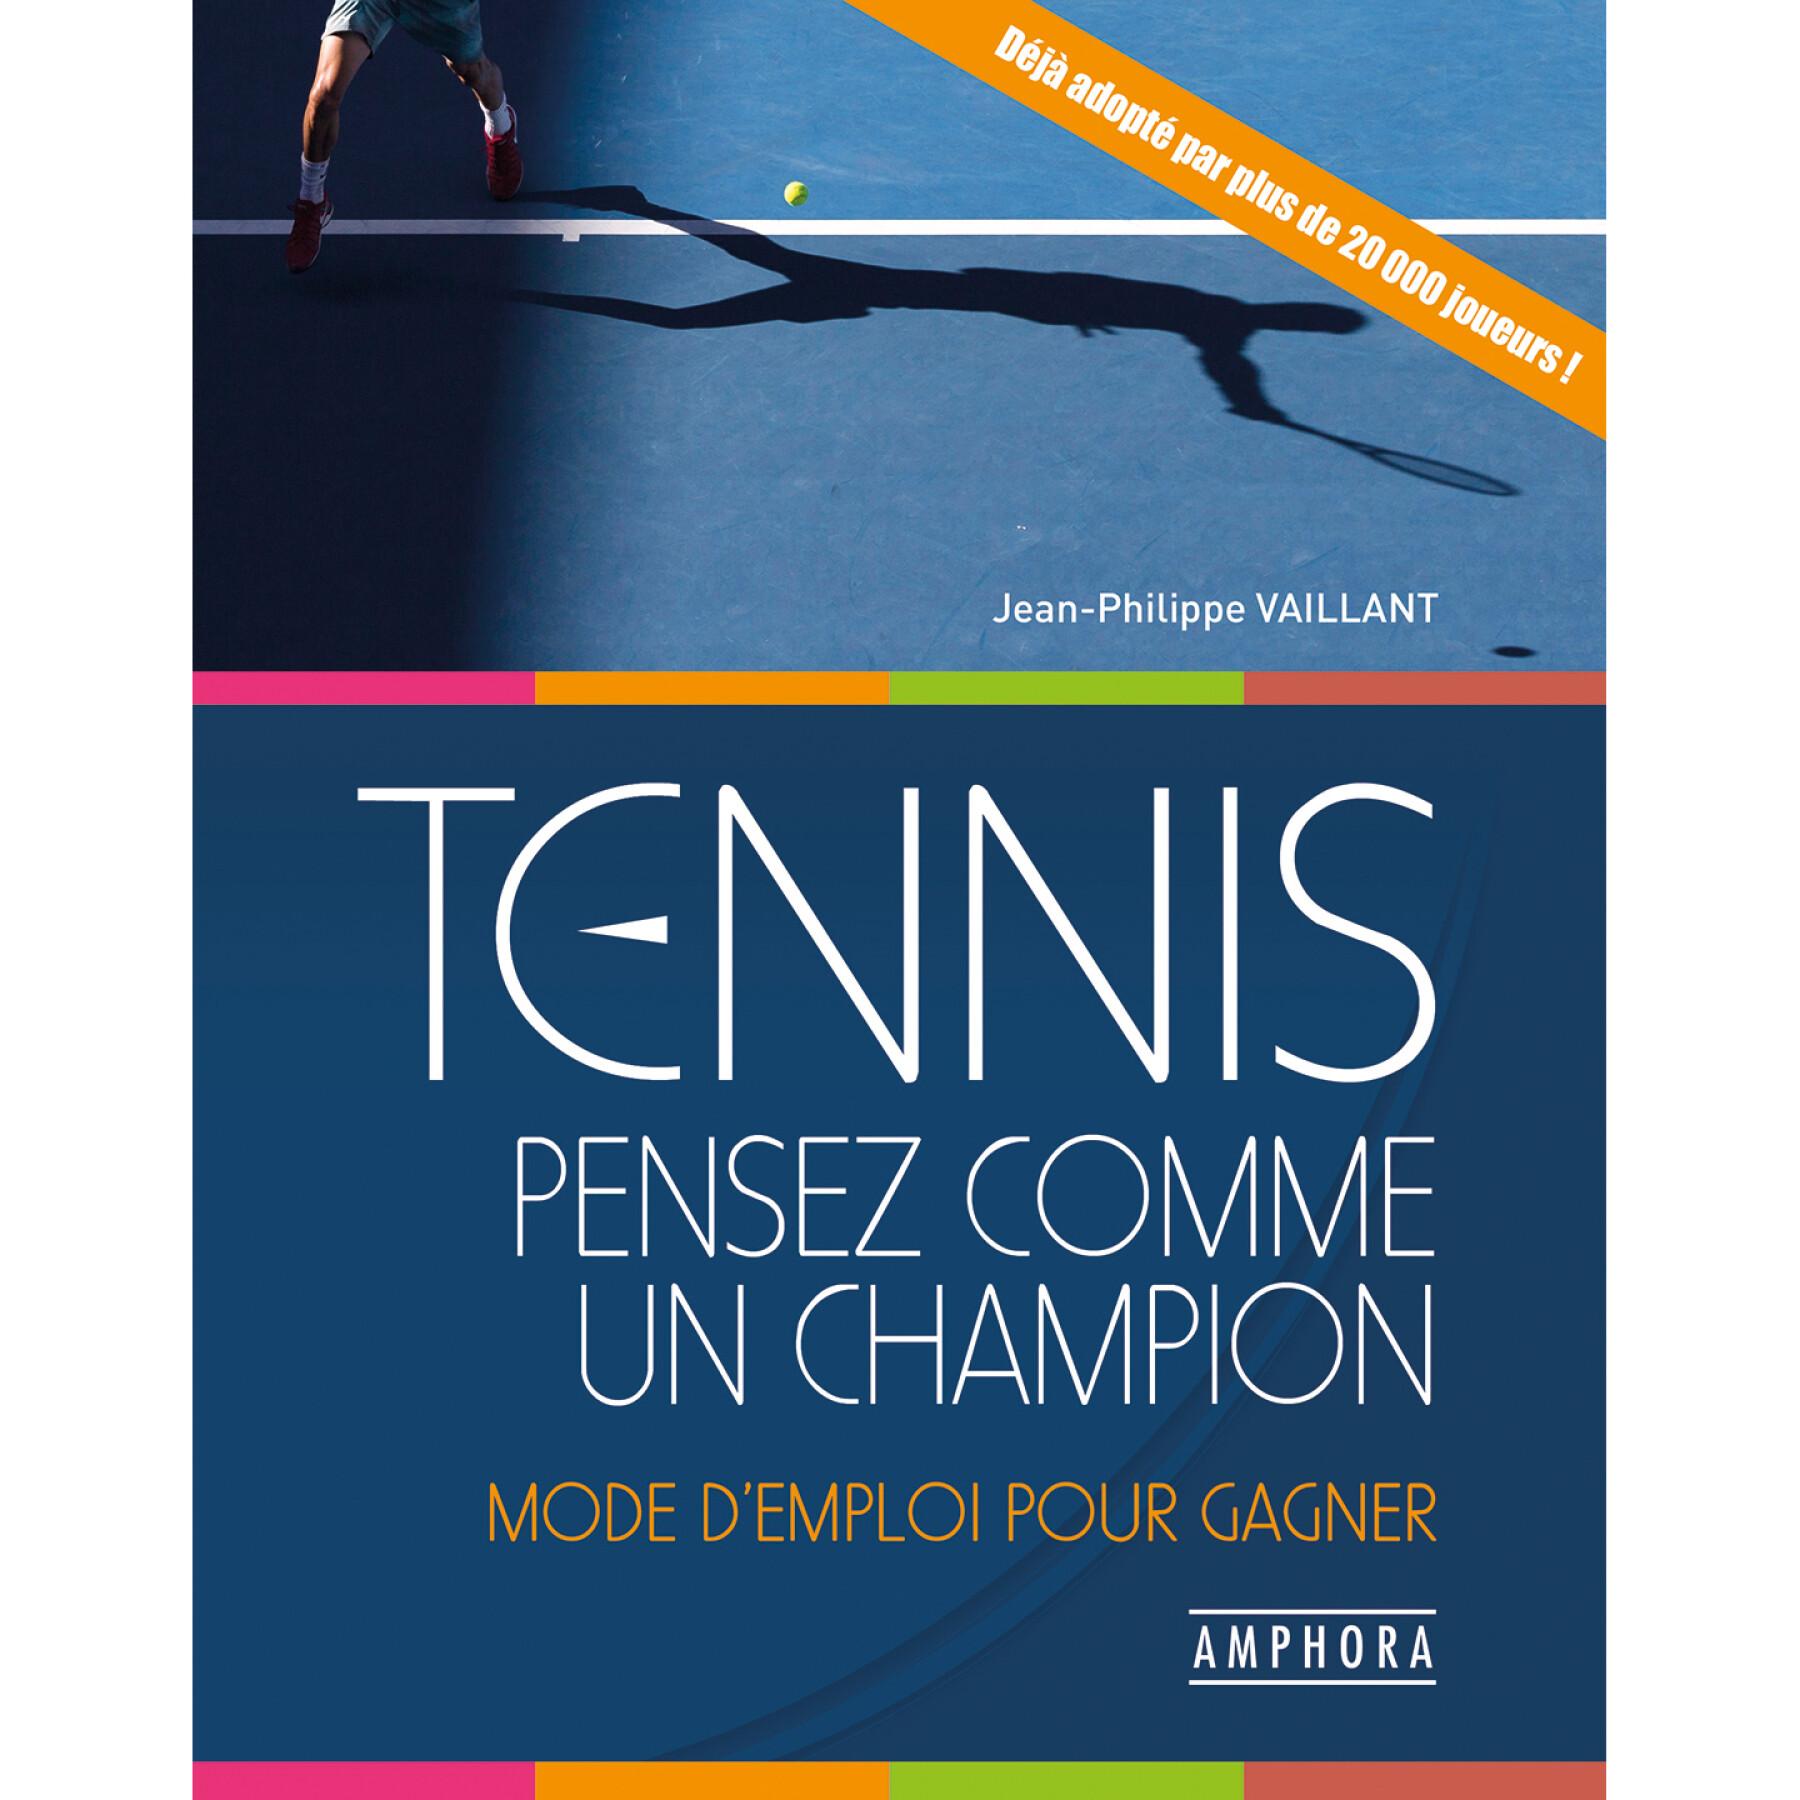 Tennis book - think like a champion Amphora